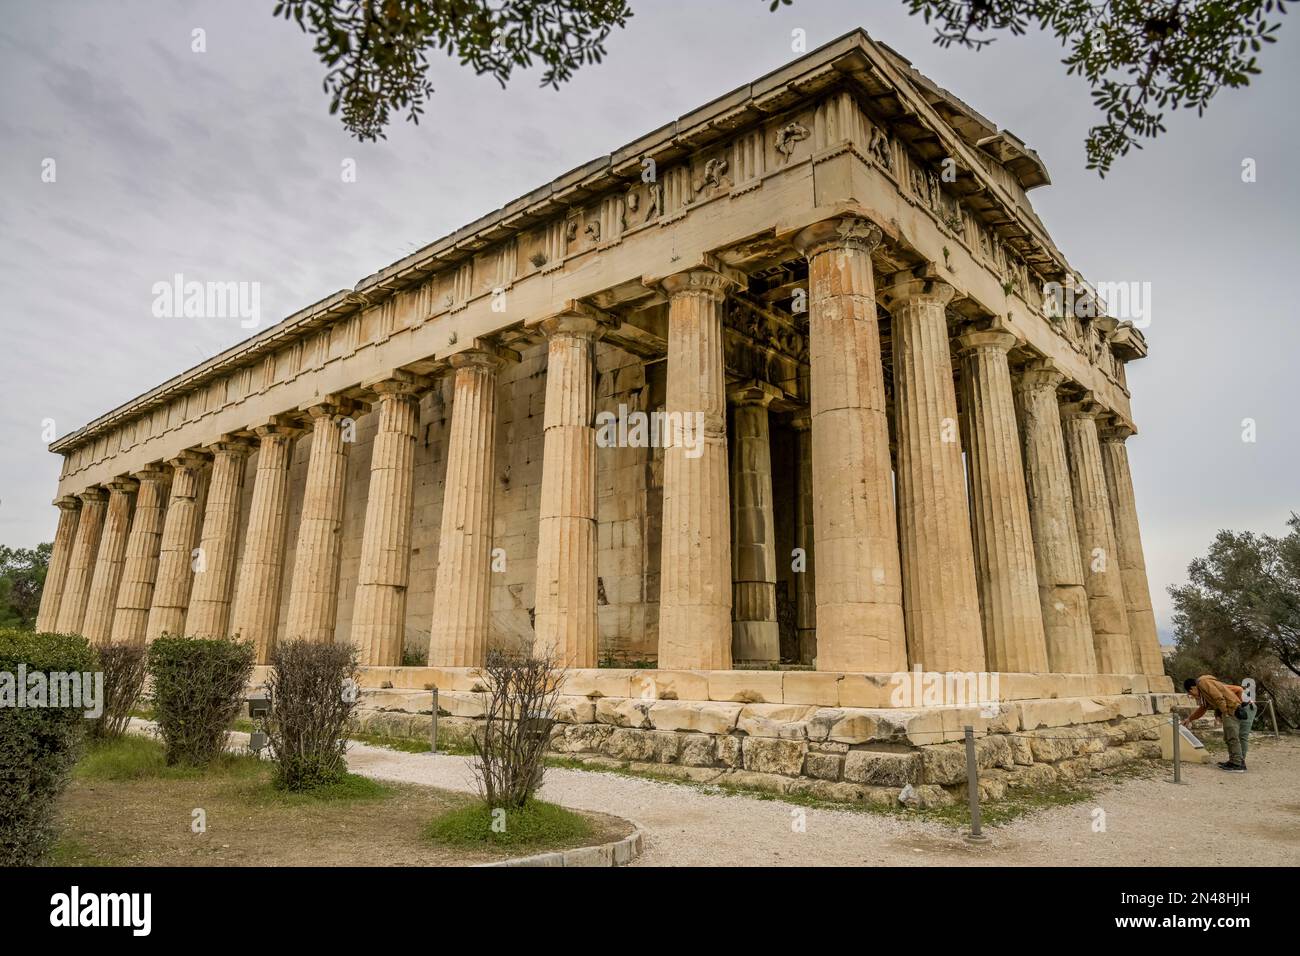 Tempel des Hephaistos, Athener Agora, Athen, Griechenland Foto Stock